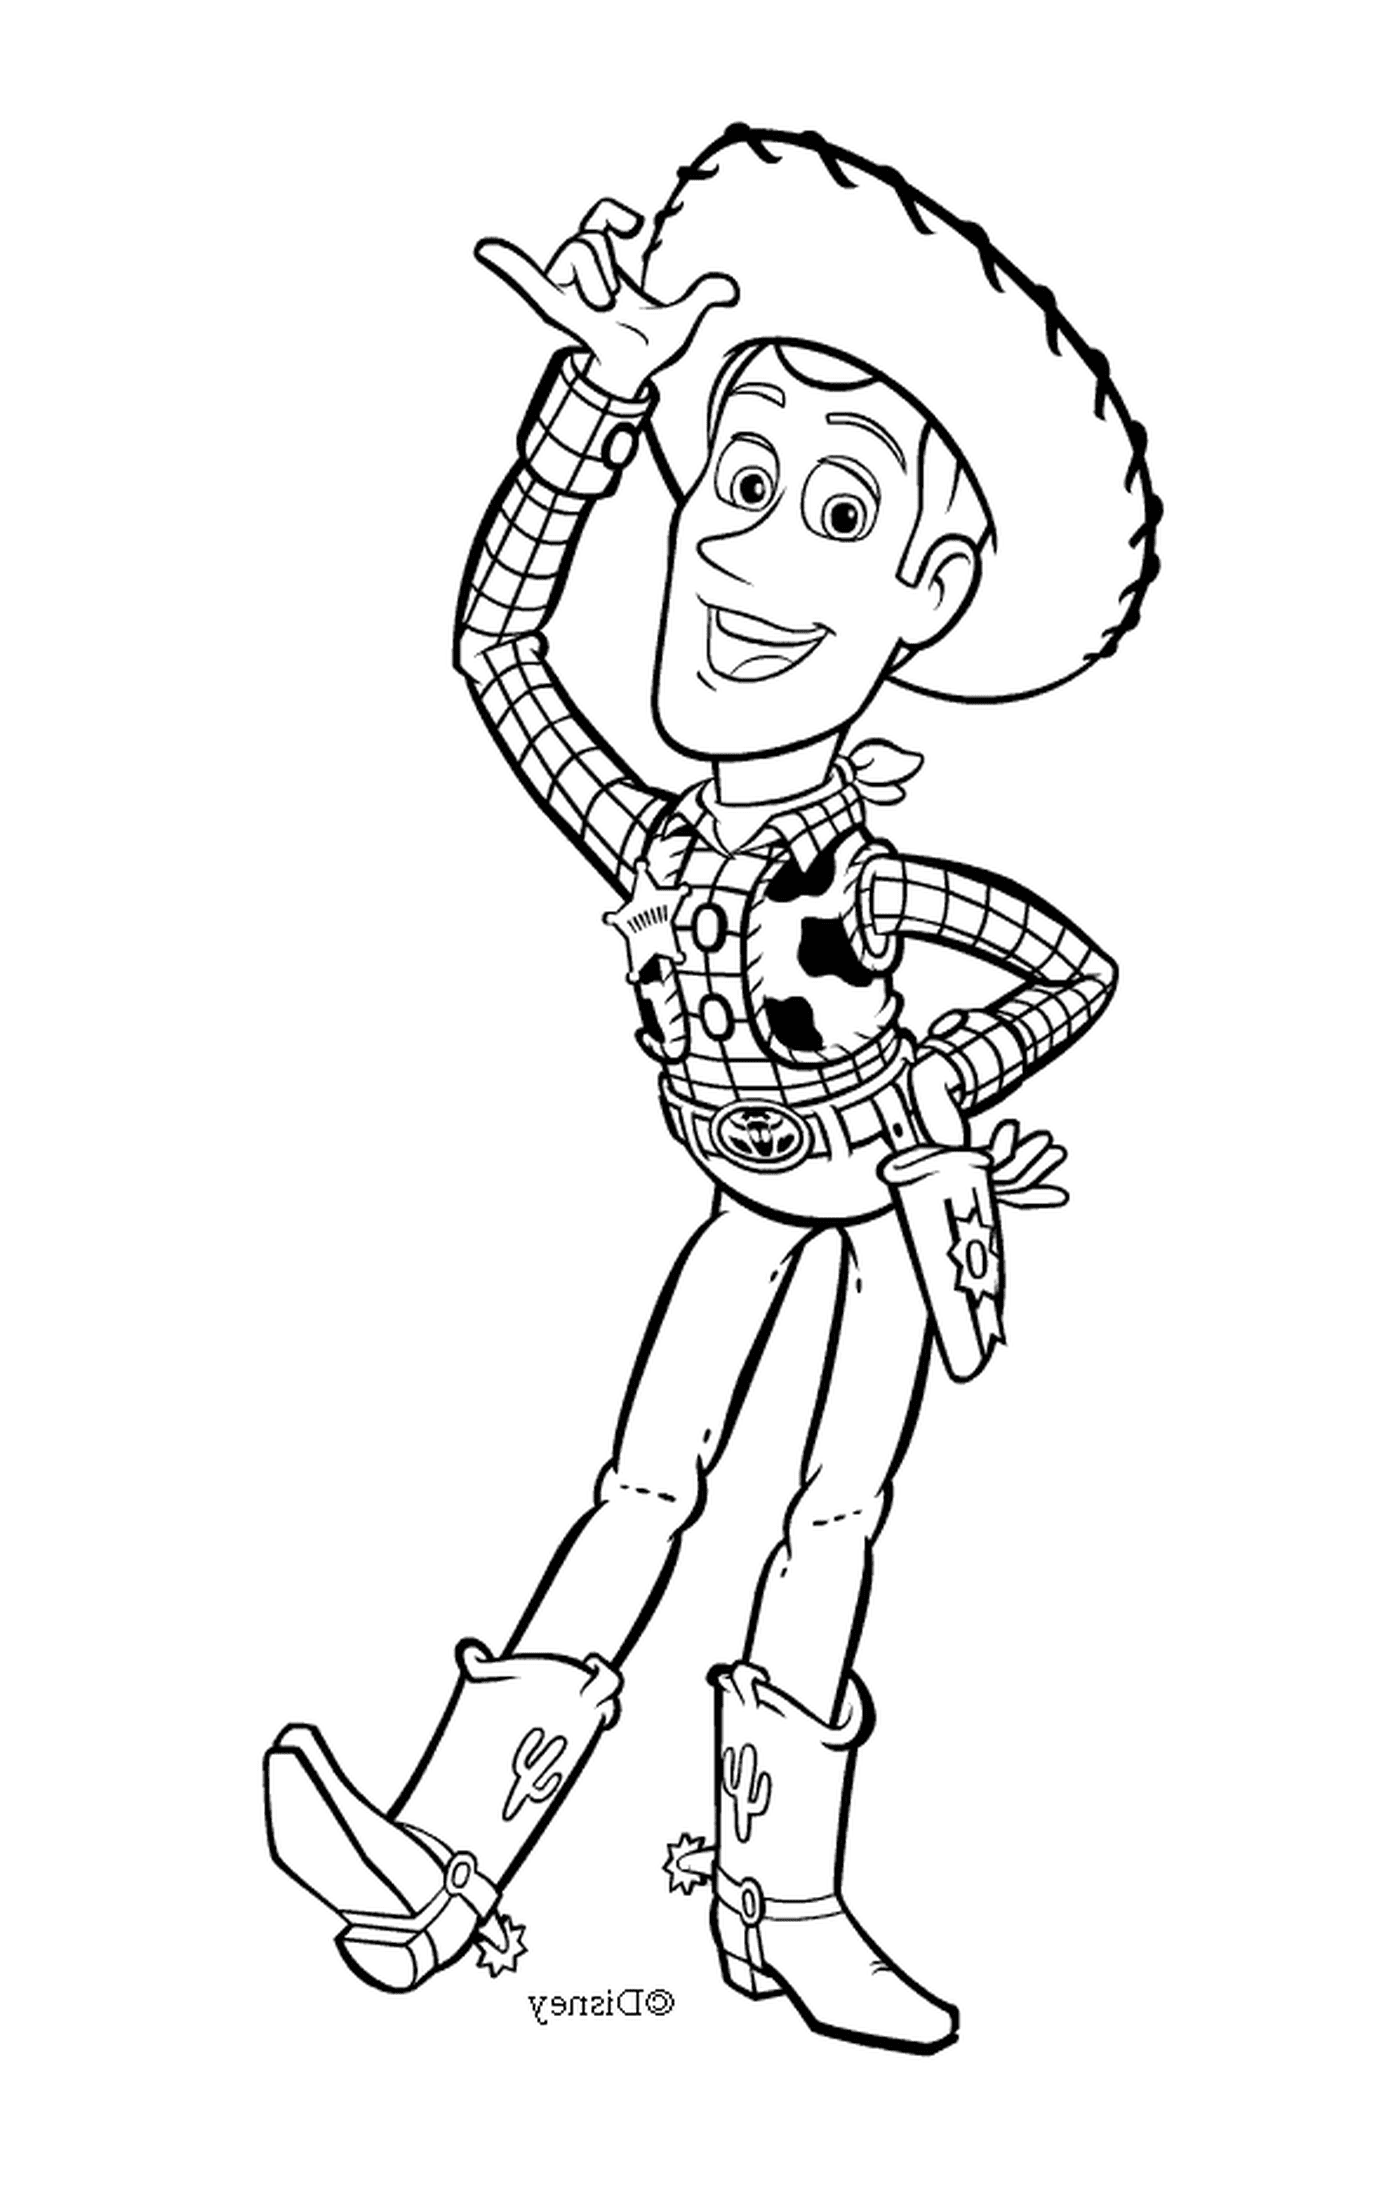 Woody le Sheriff